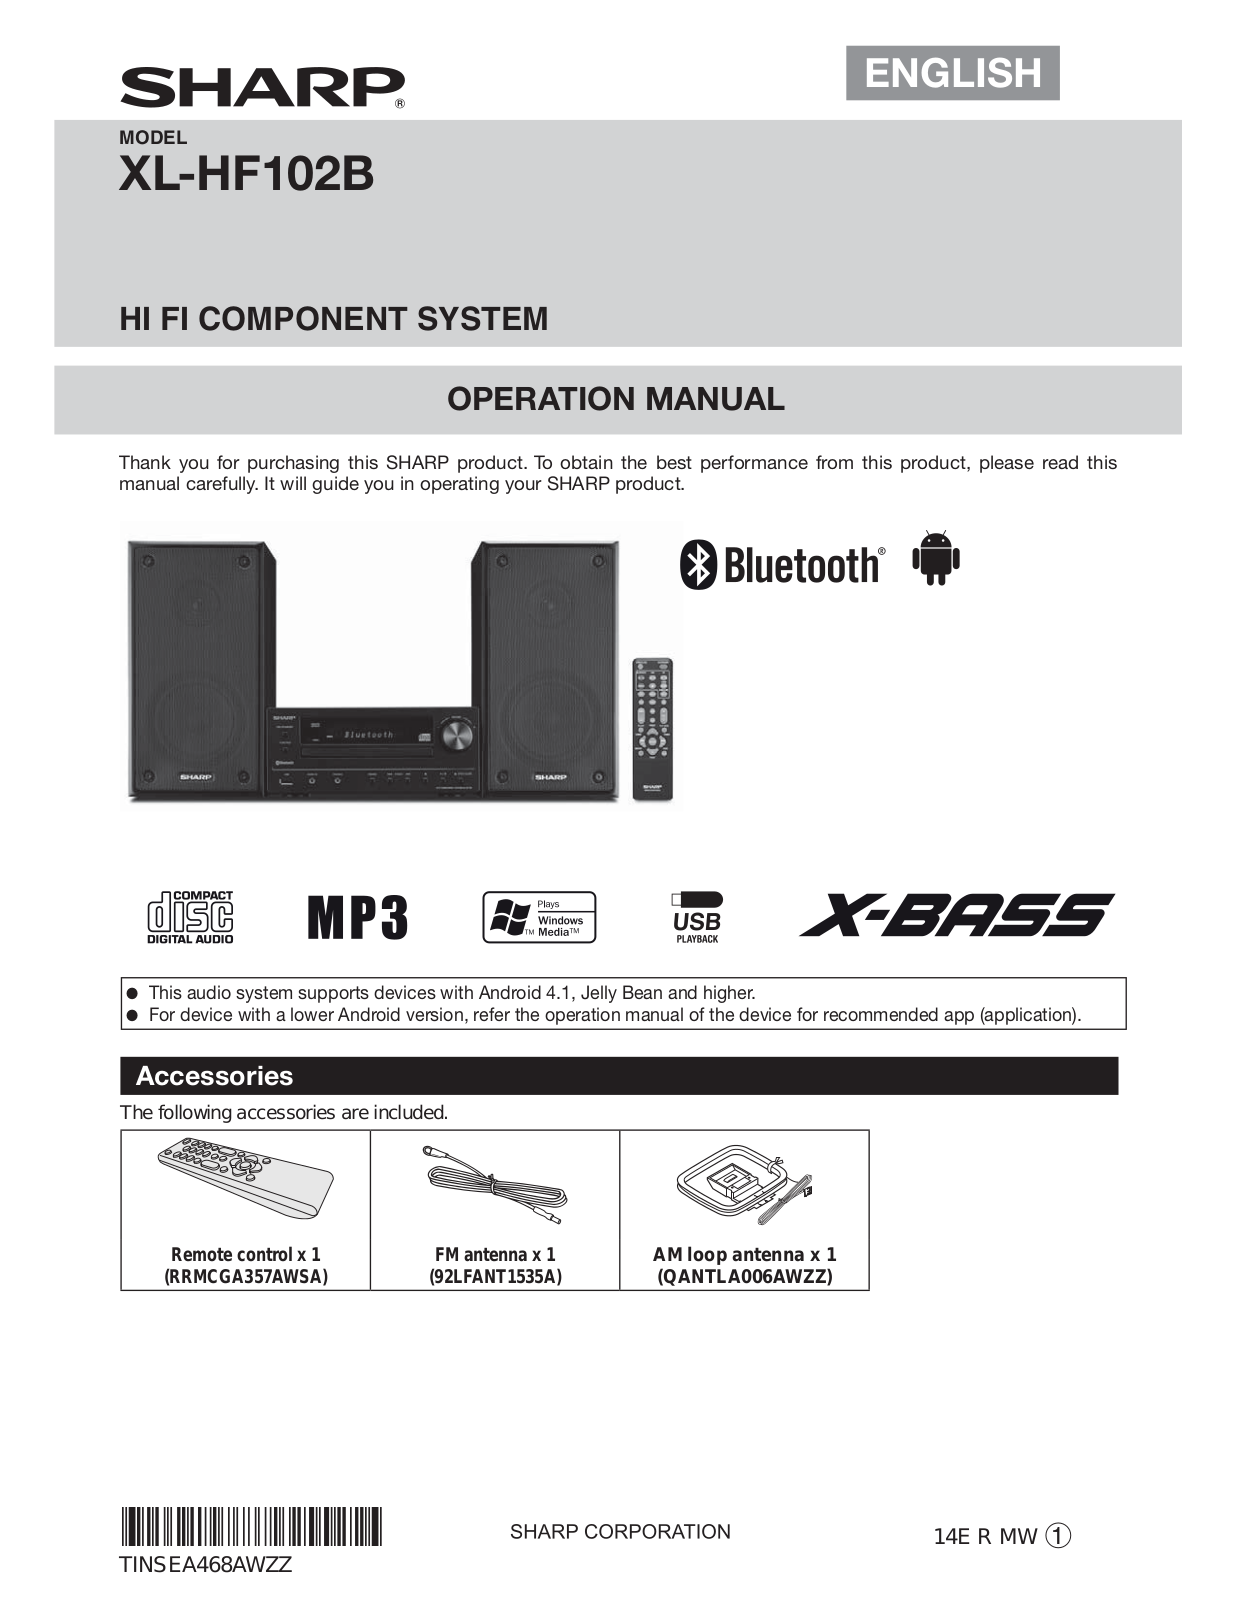 SHARP XLHF102B User Manual